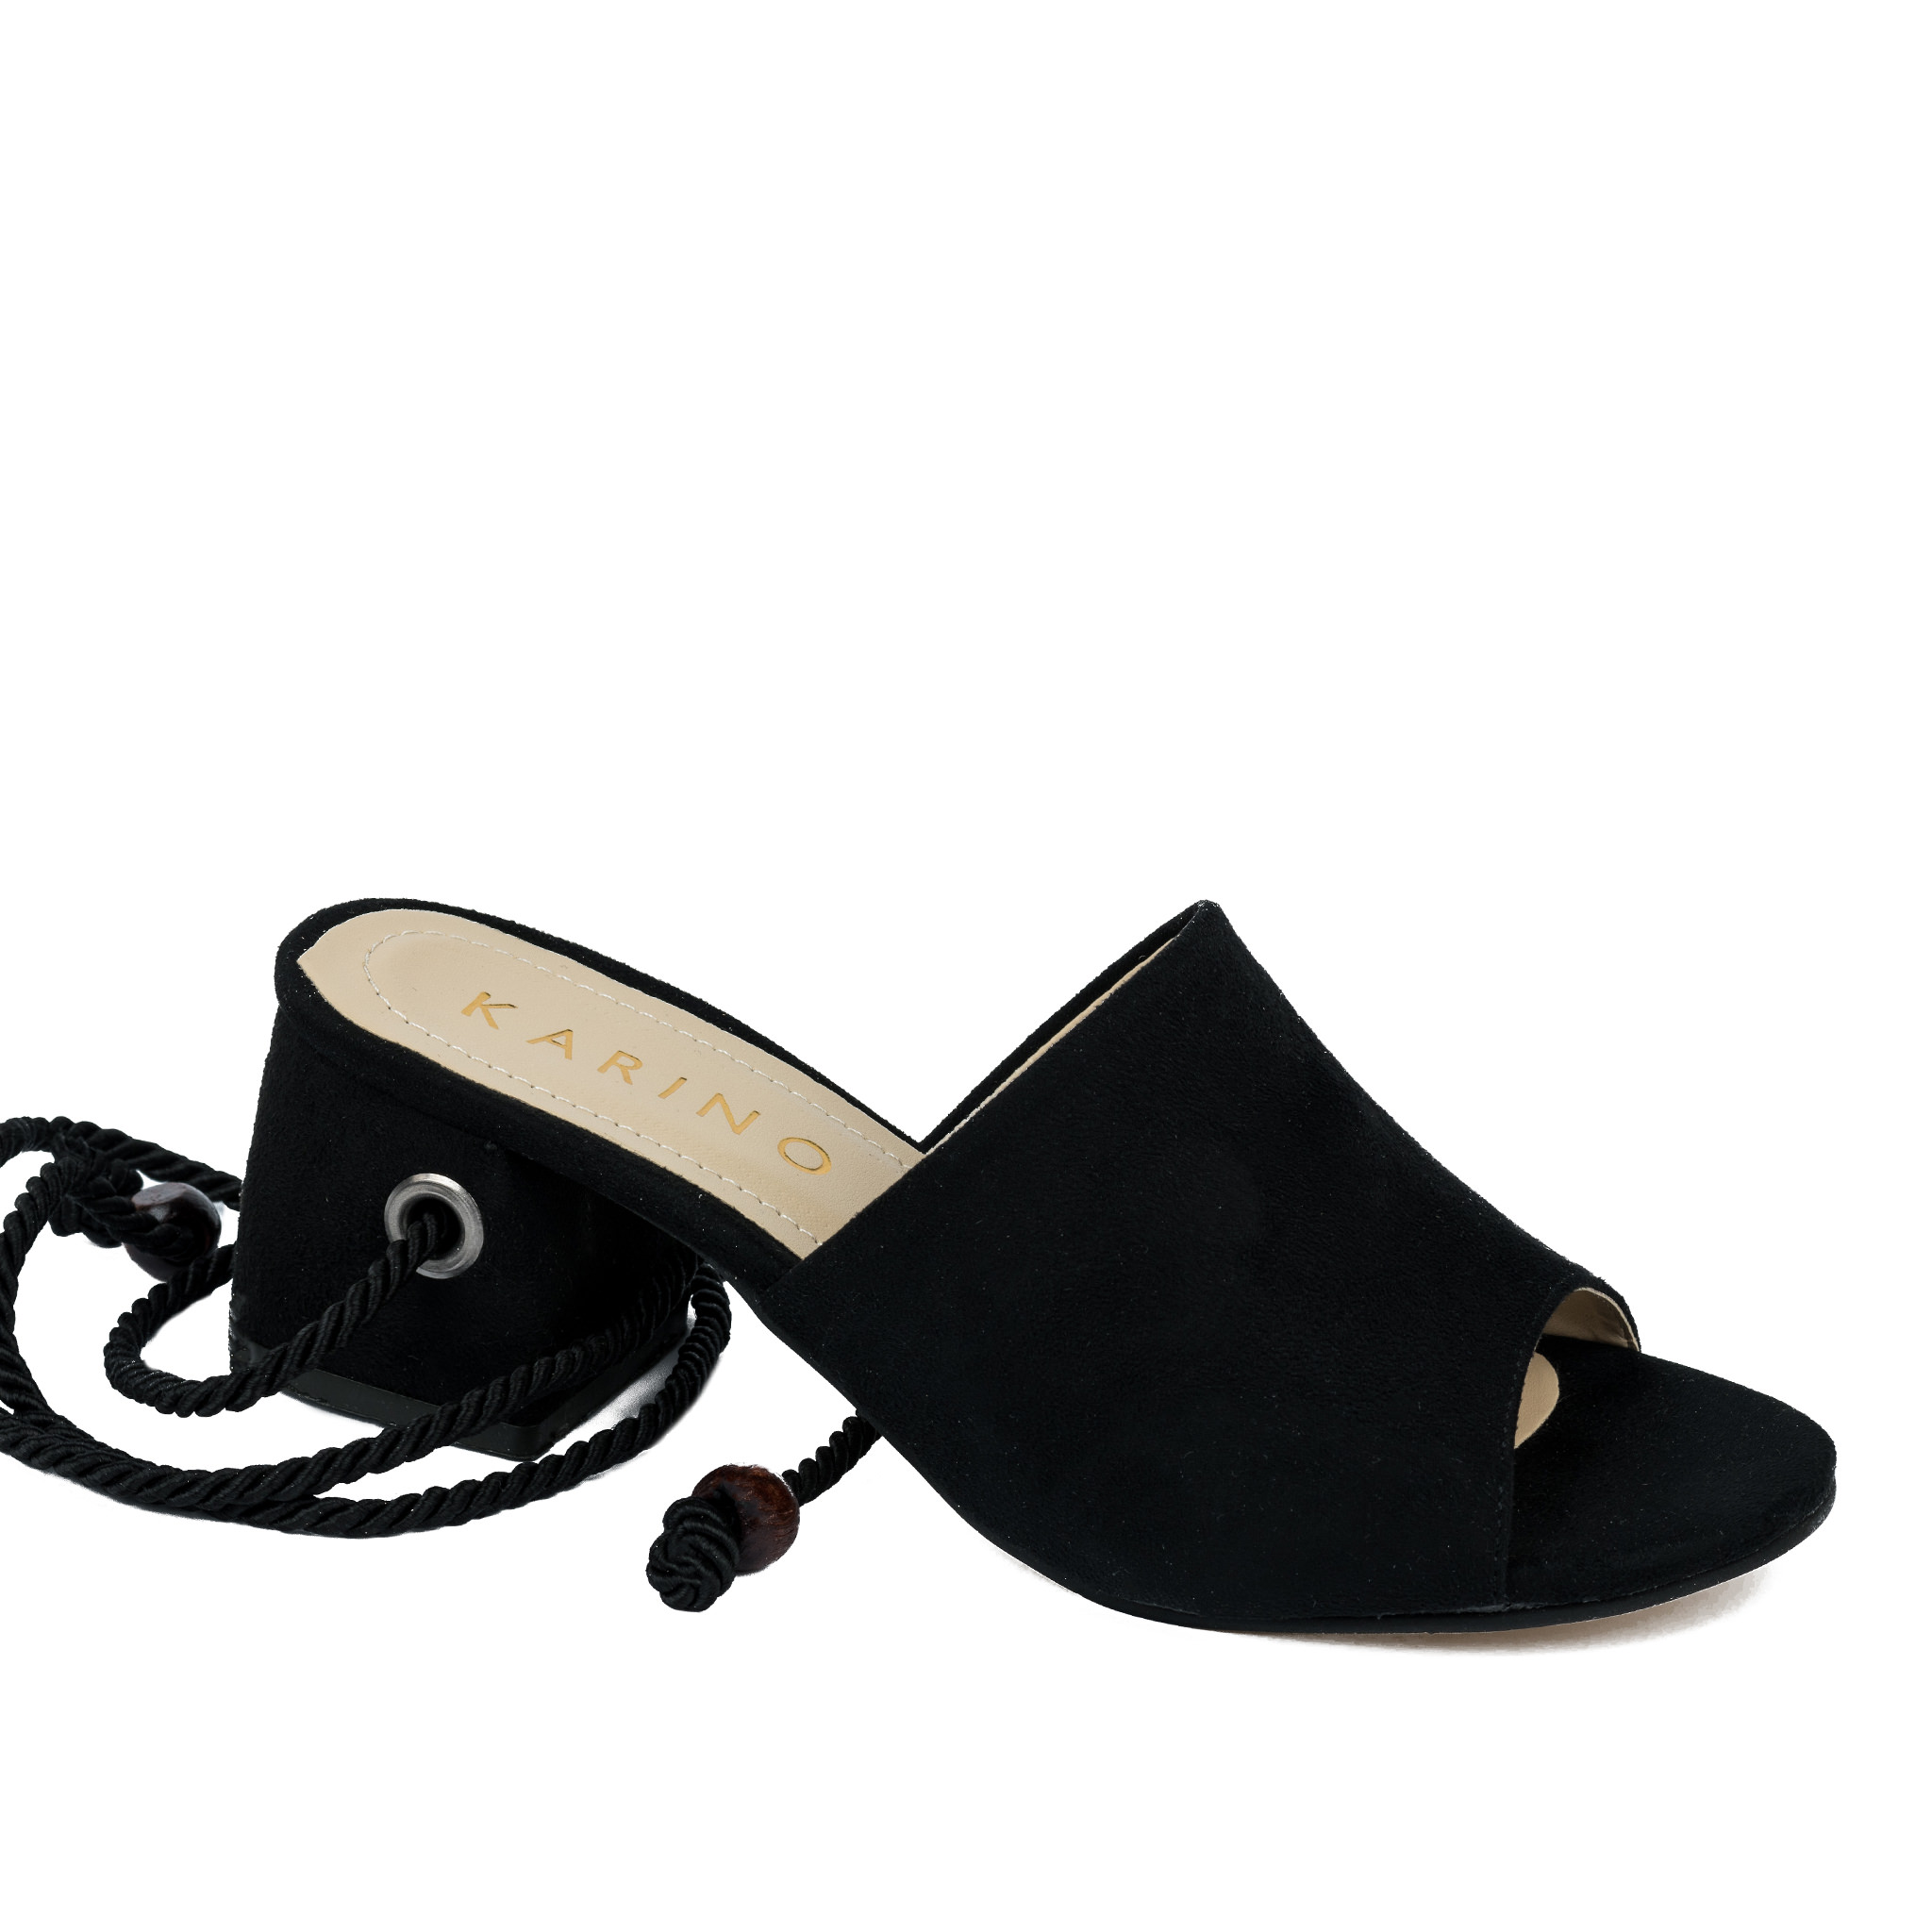 Women sandals A455 - BLACK